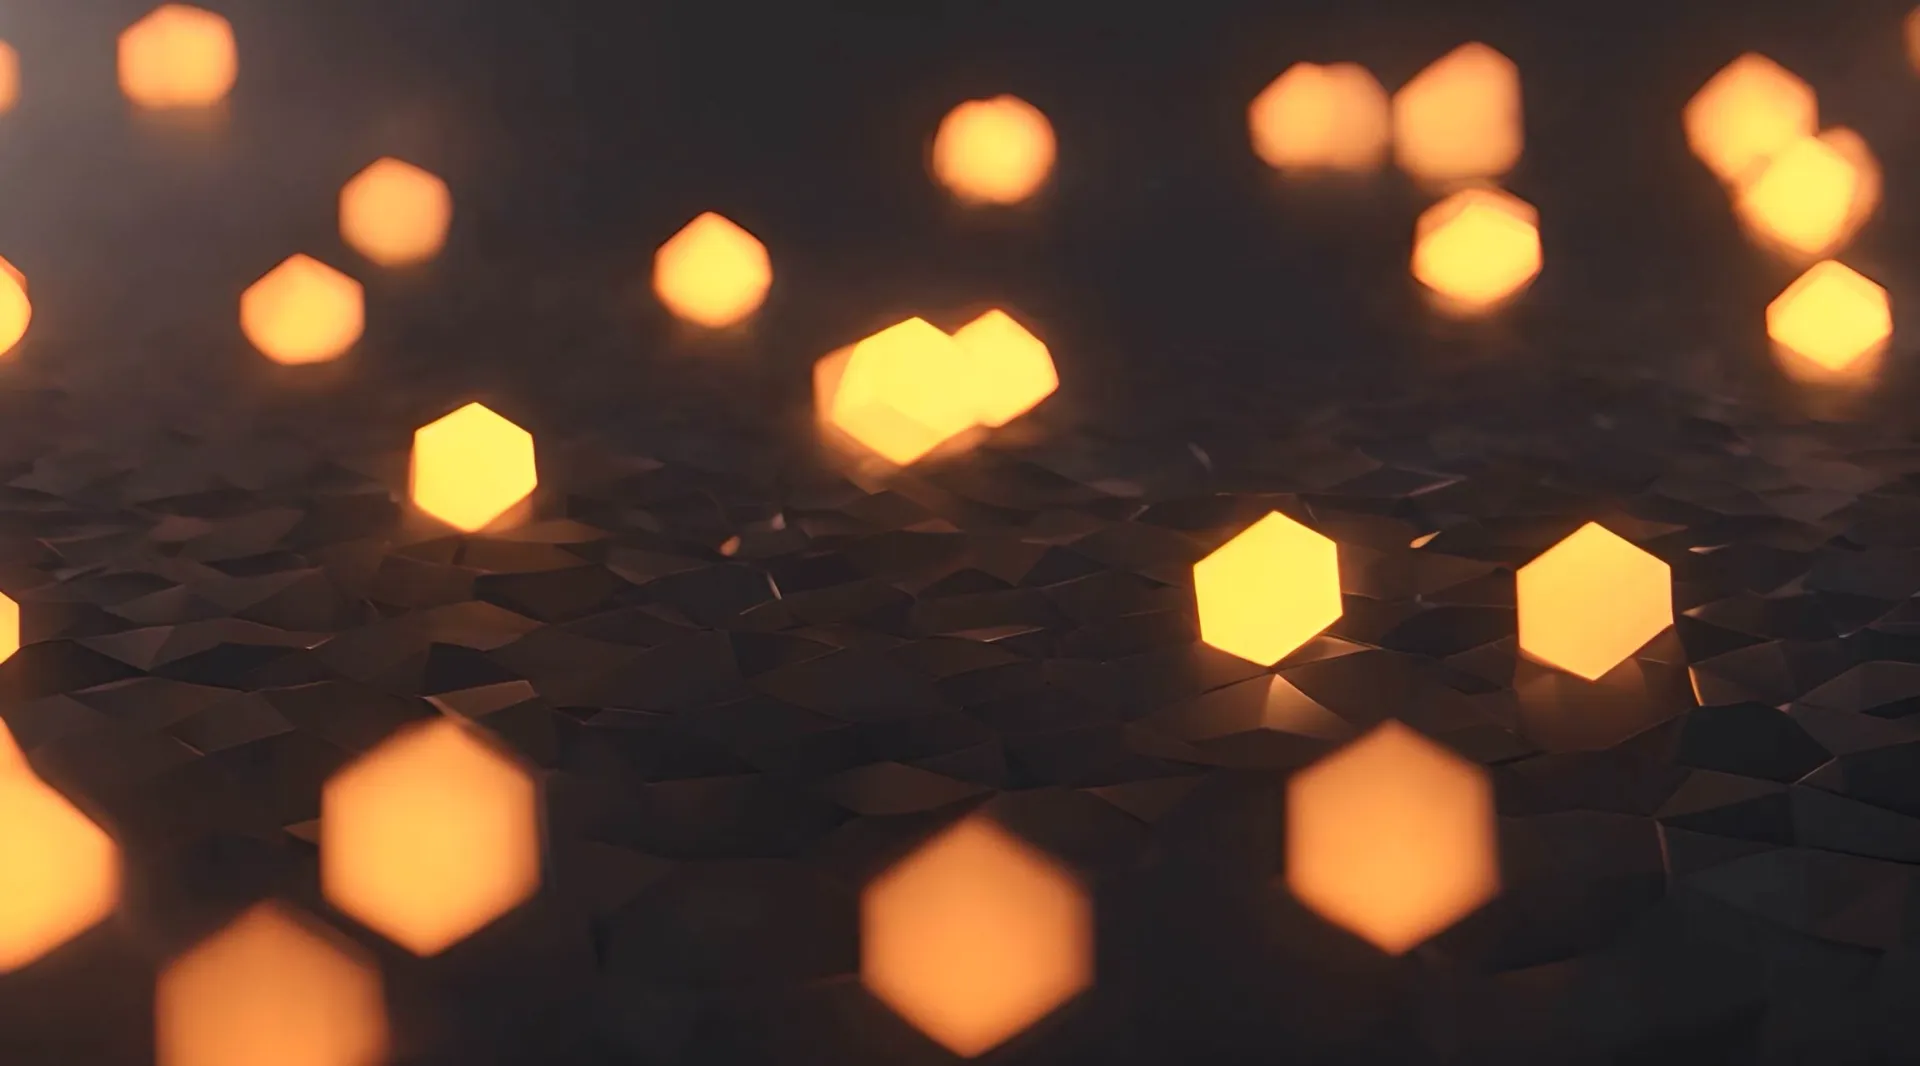 Warm Bokeh Lights on Hexagonal Patterns Motion Backdrop